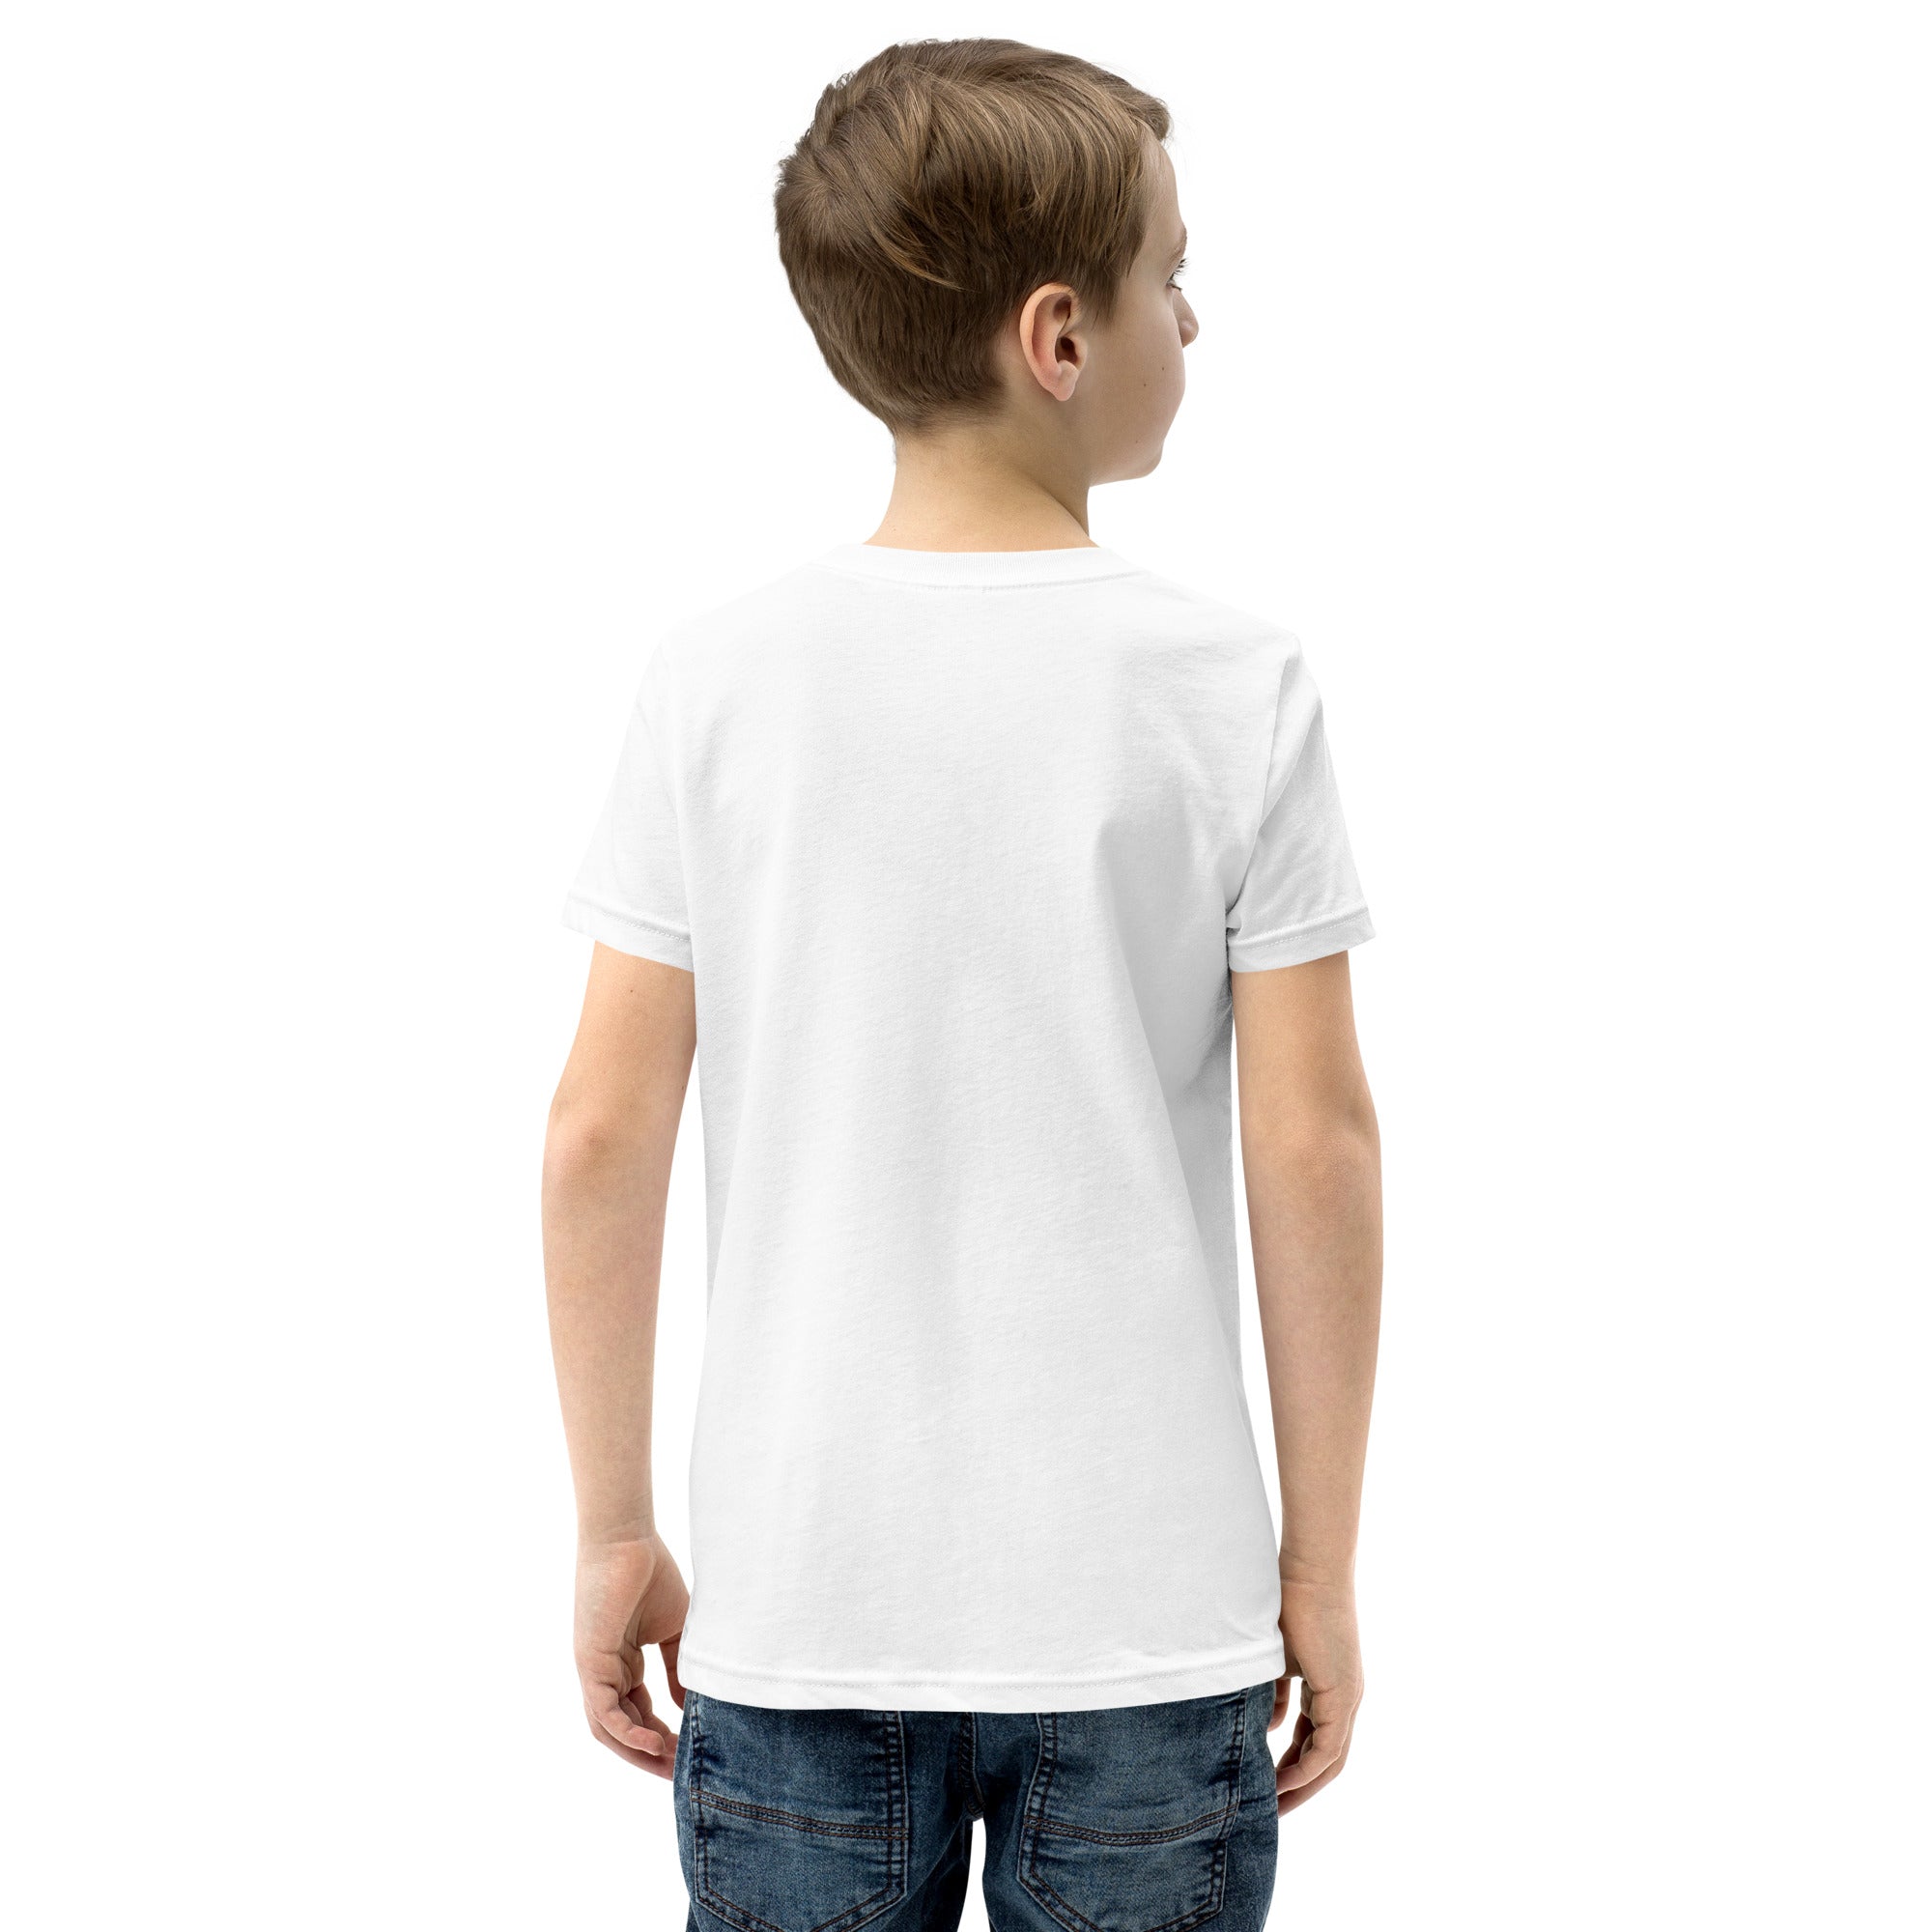 Peachtree Corners Logo R/B - White Youth Short Sleeve T-Shirt